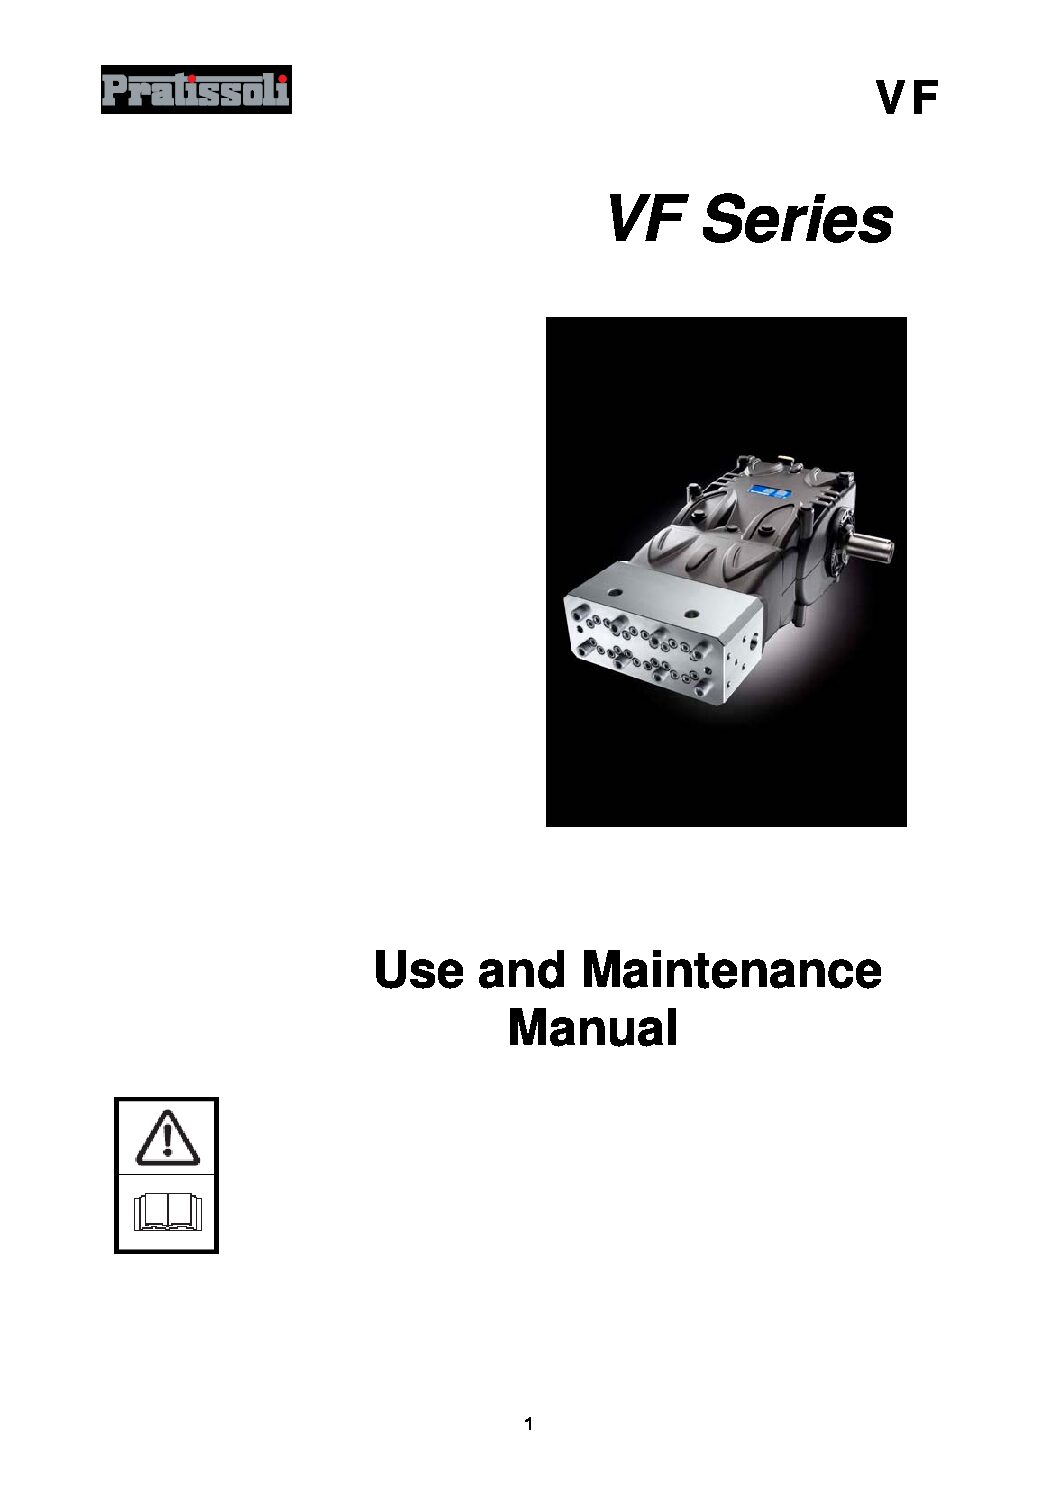 Pratissoli VF Series Plunger Pumps Maintenance Manual